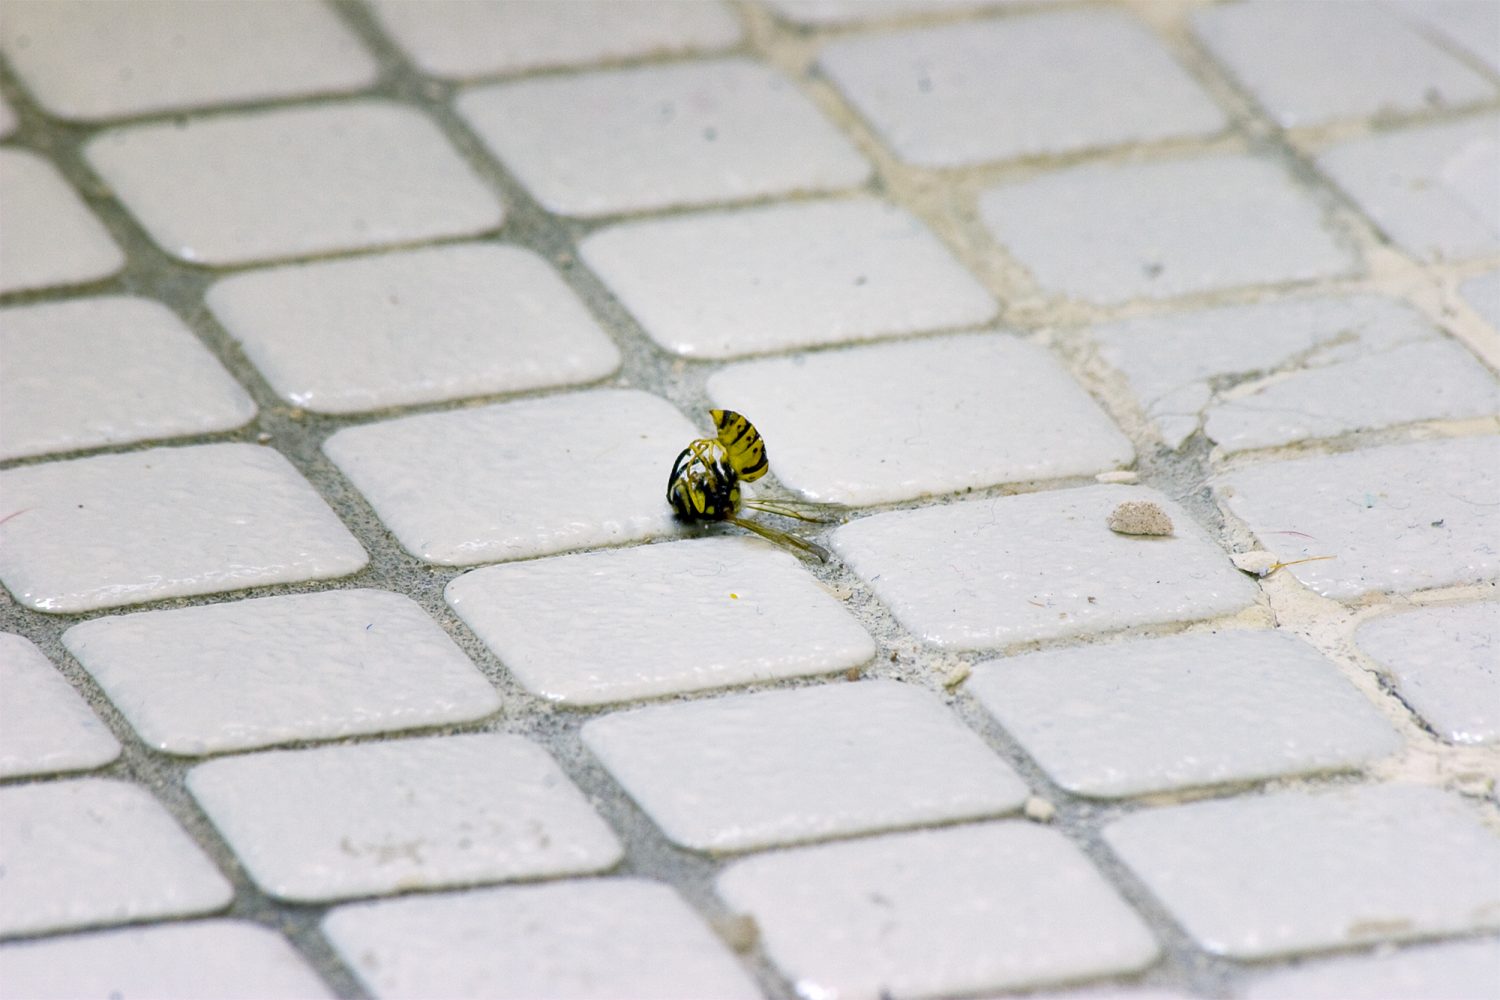 Wasp Dead on Its Head on Bathroom Tile